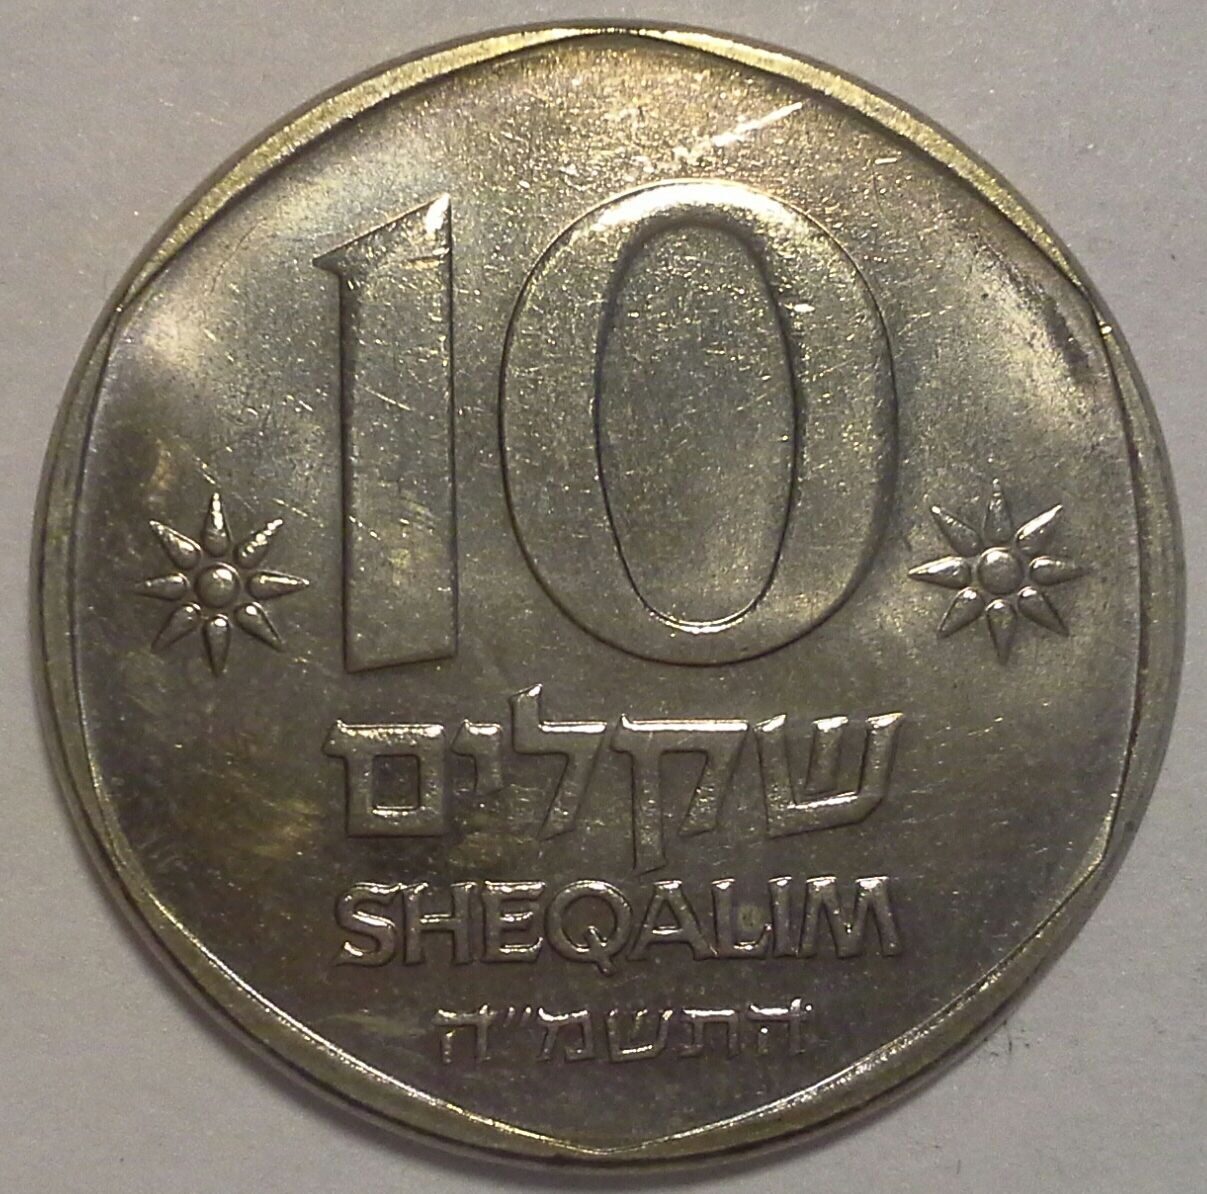 10 Шекелей 1985. 10 Шекелей фото. 10 Шекелей монета. 2 Шекеля в рублях. 30 шекелей